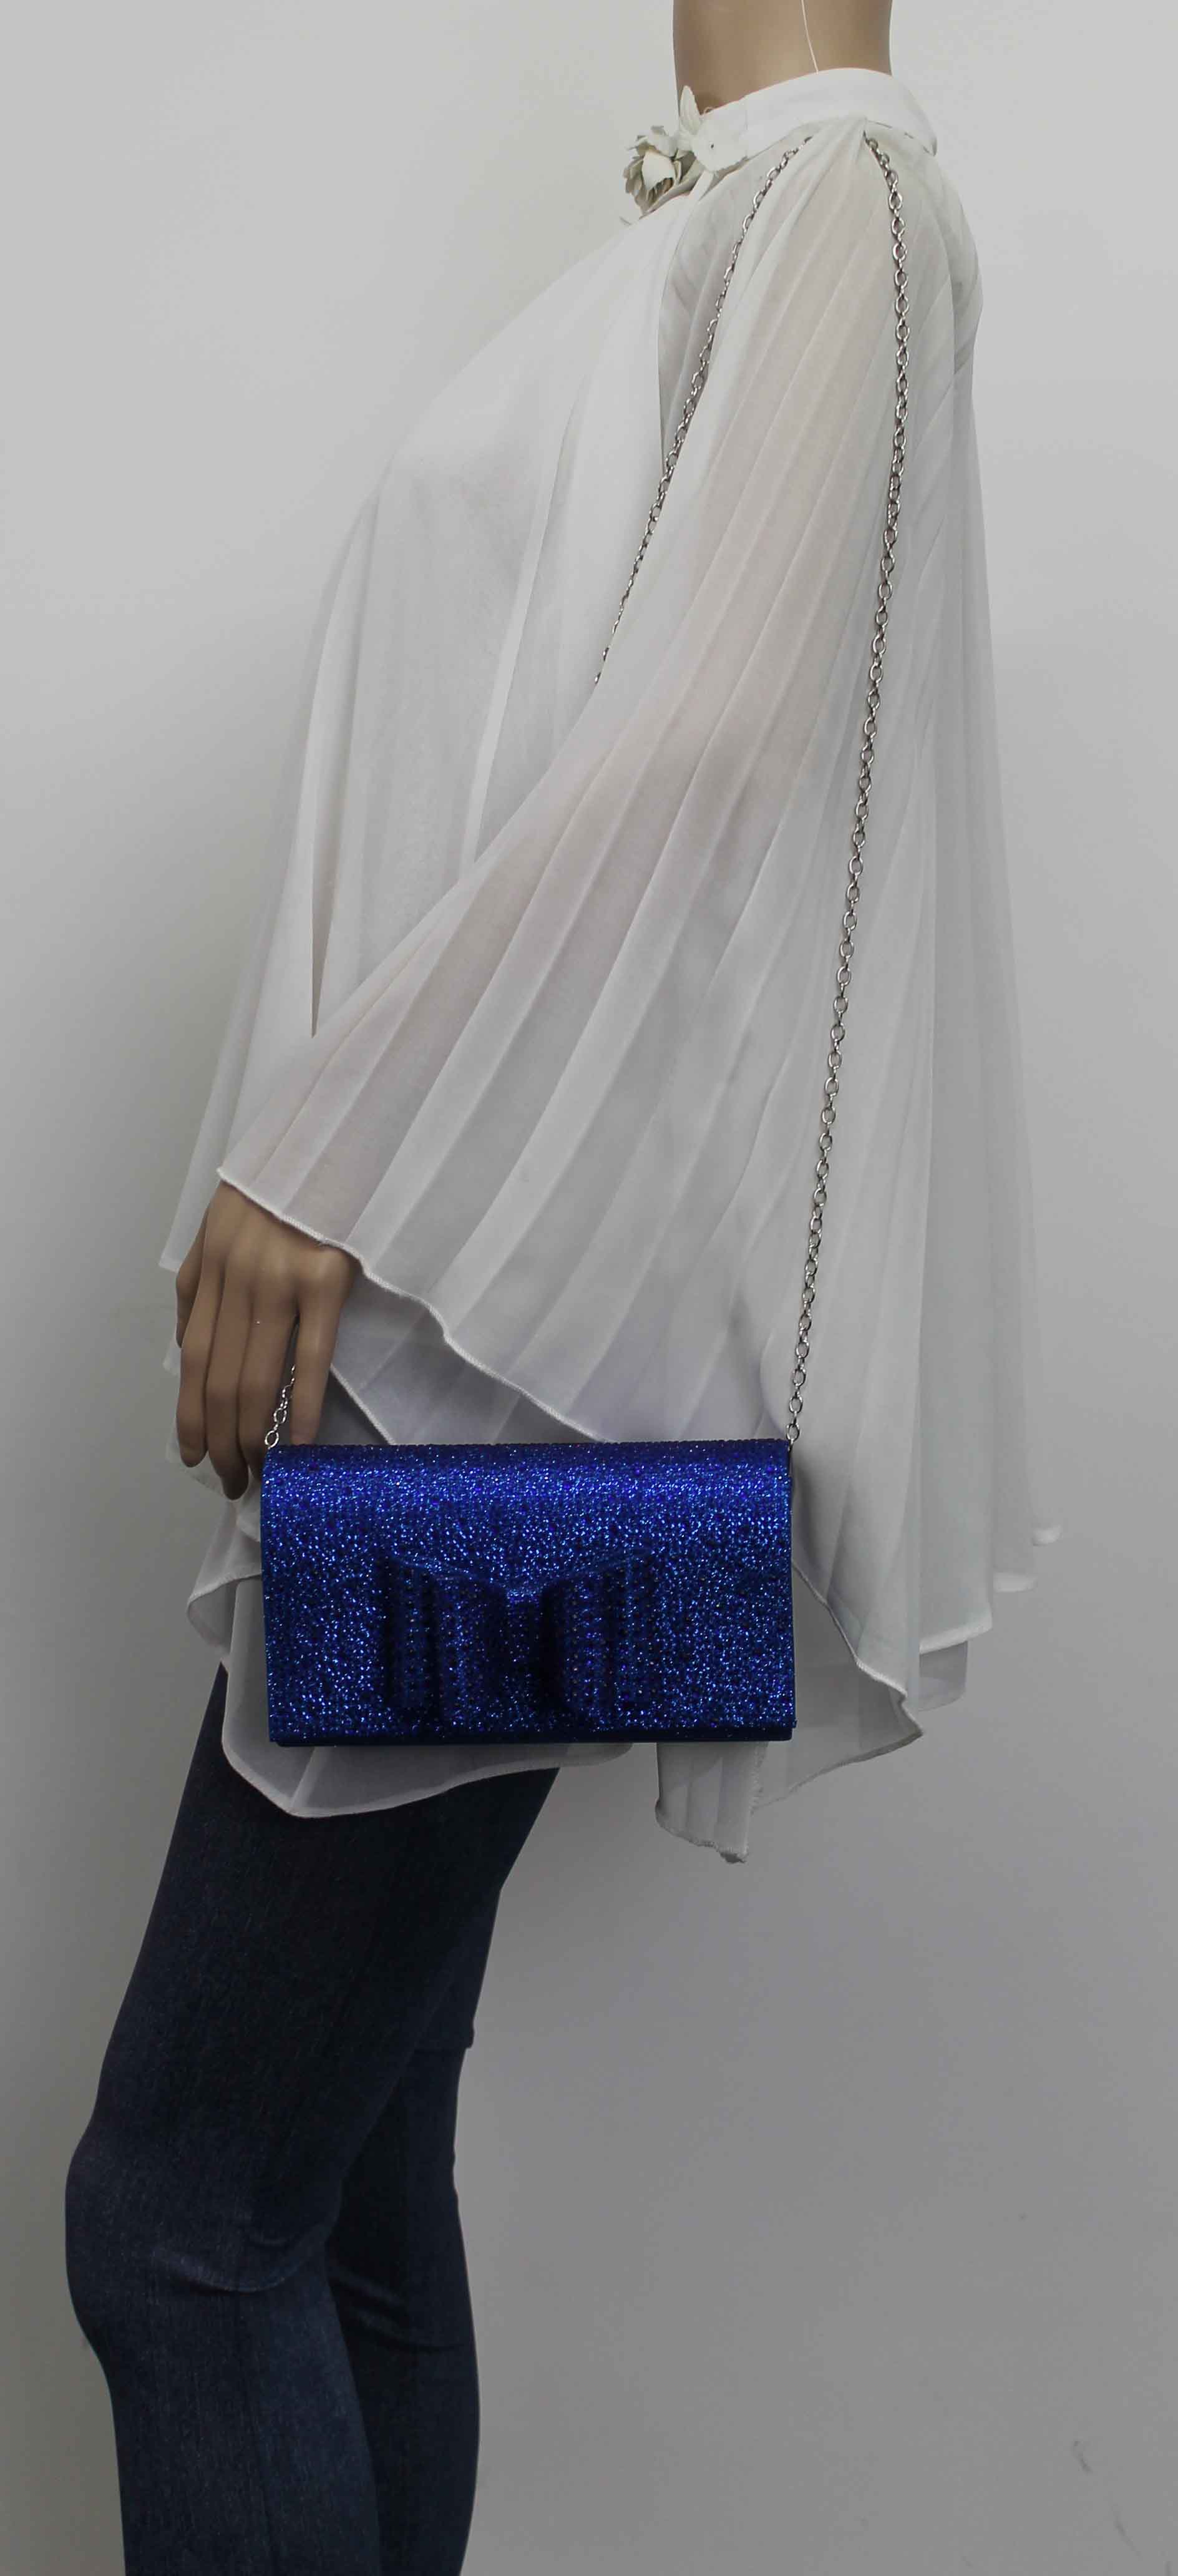 SWANKYSWANS Willa Glitter Bow Clutch Bag Blue Cute Cheap Clutch Bag For Weddings School and Work